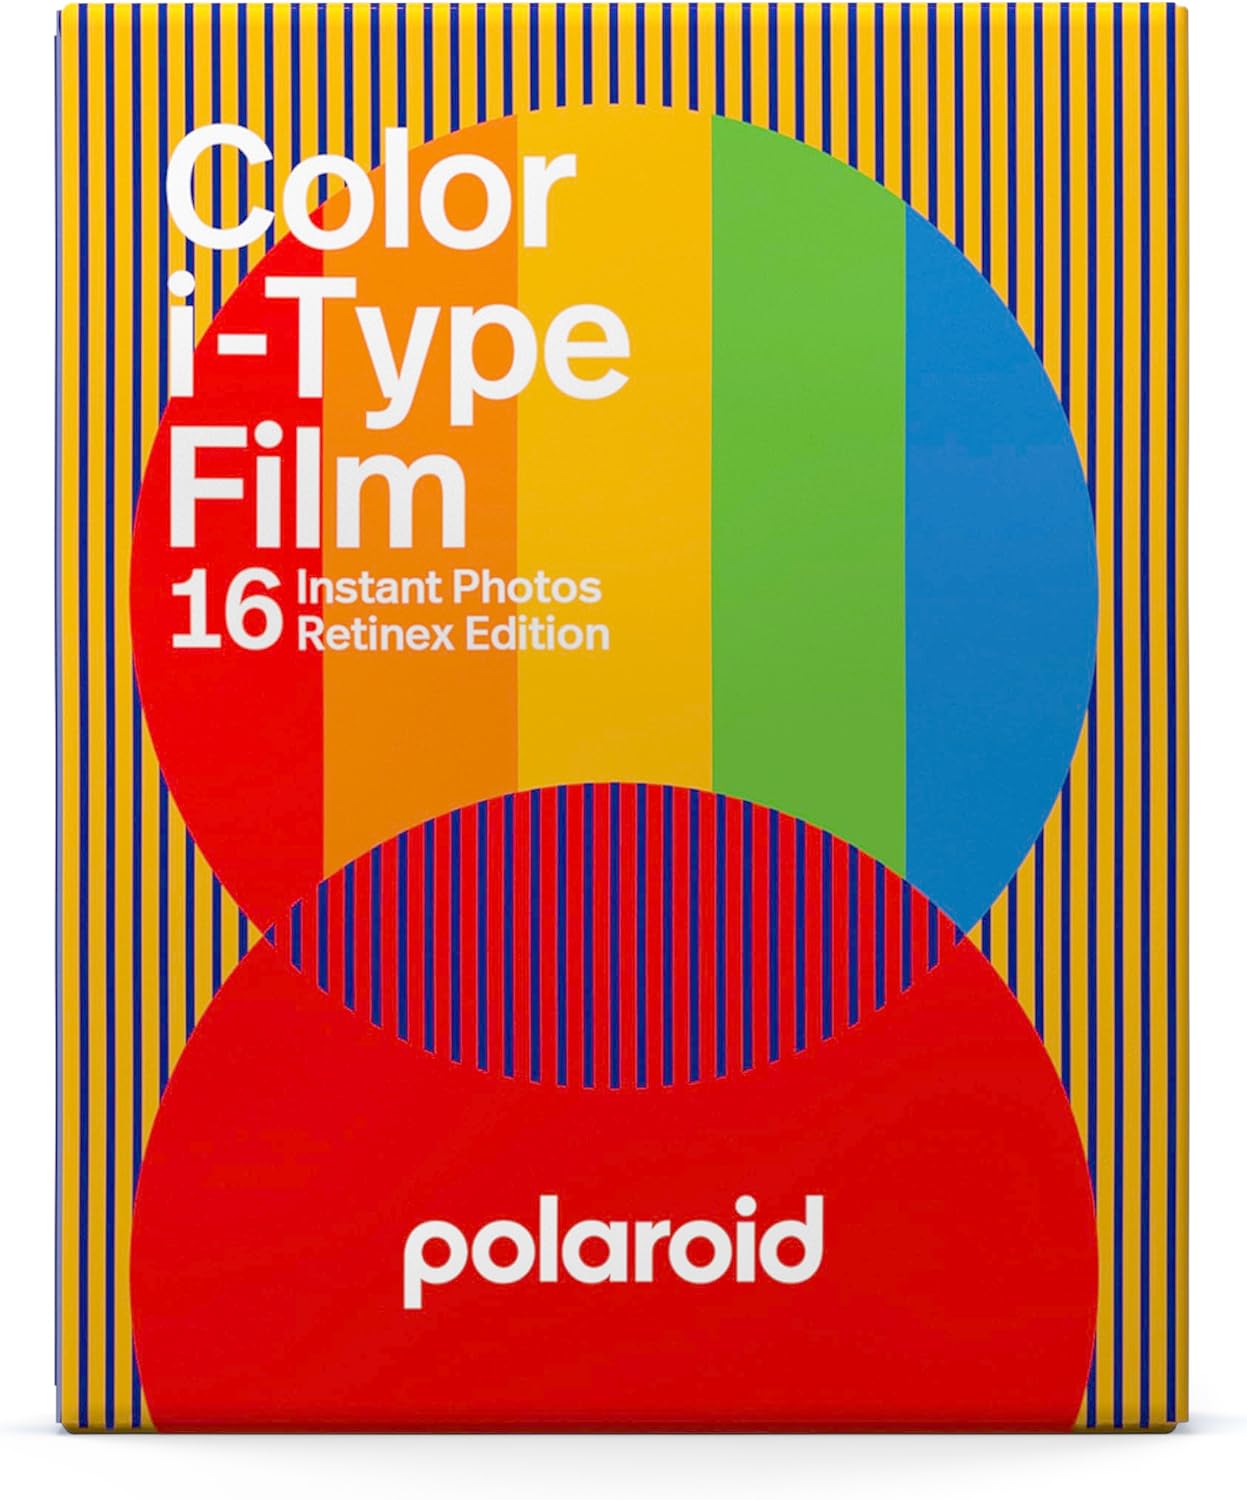 Polaroid 6285 Color I-Type Film - Retinex Edition Round Frame - Double Pack (16 Photos)